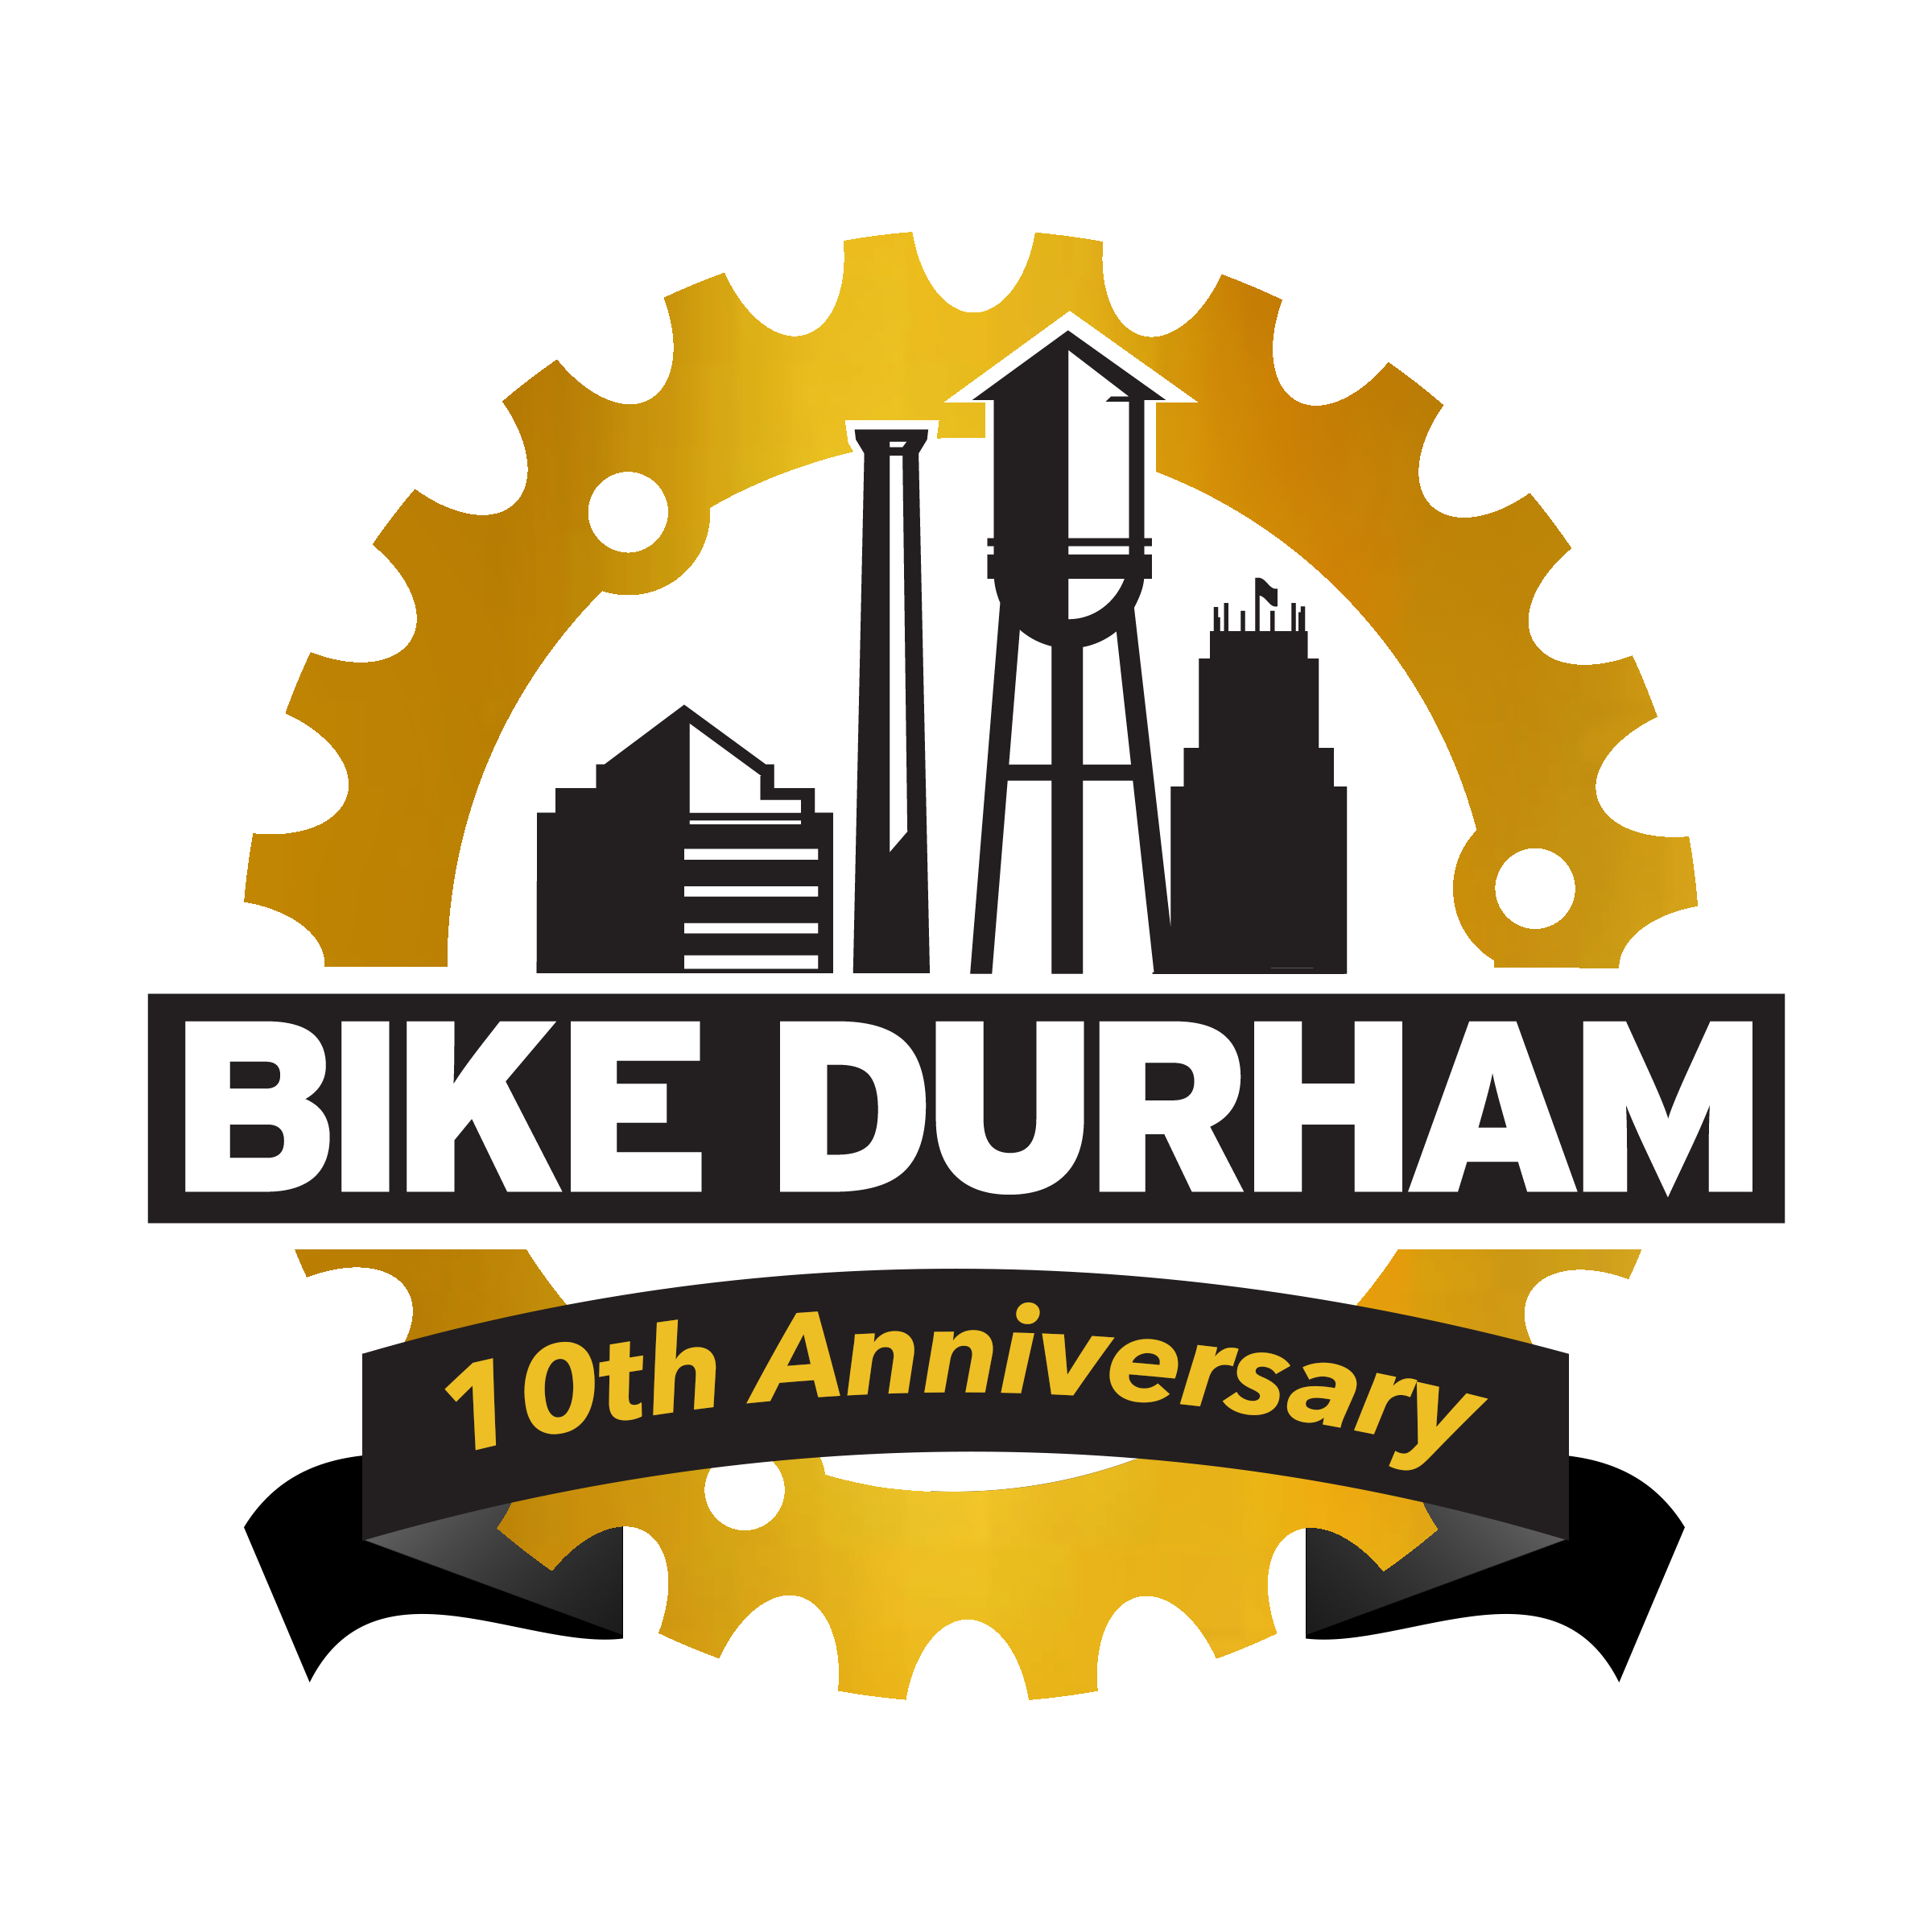 Bike Durham 10th anniversary logo.png